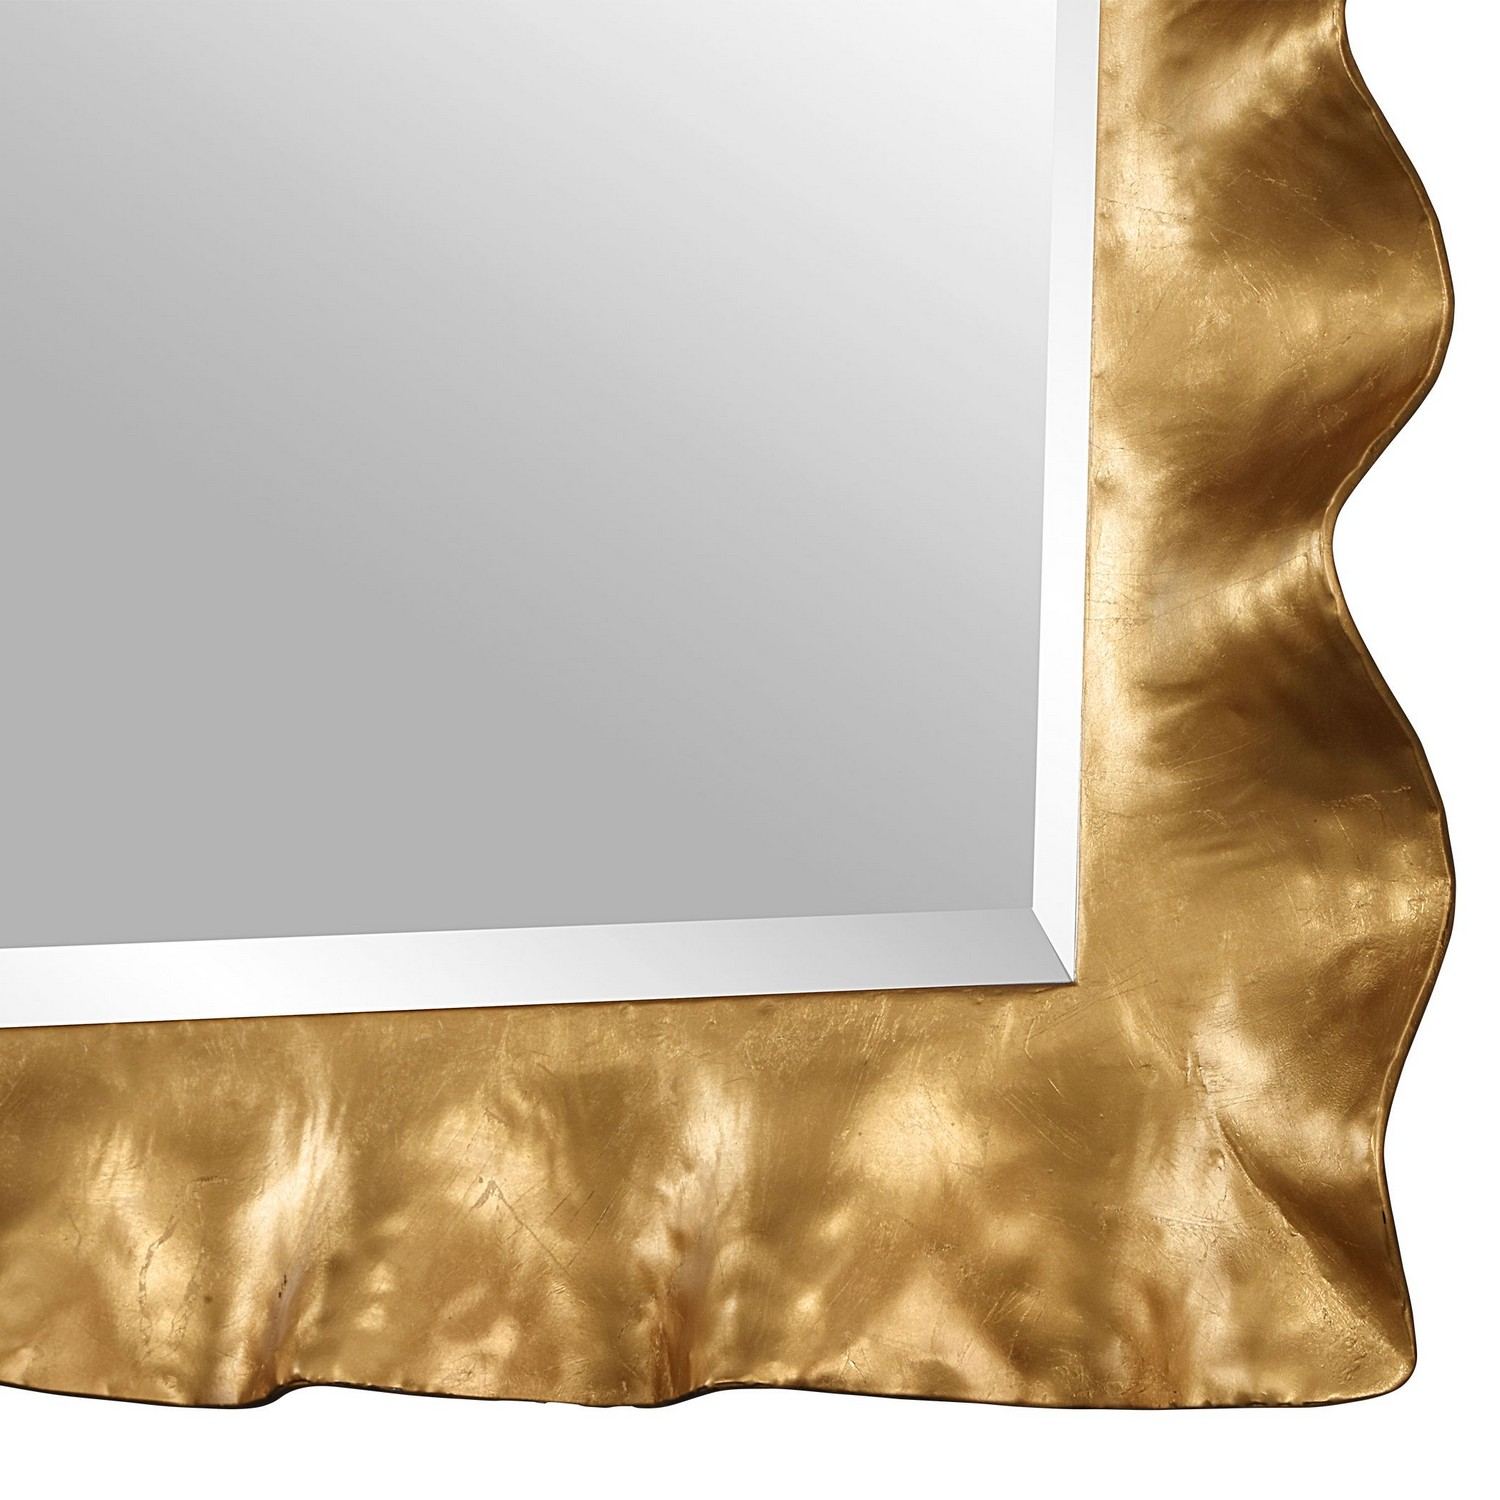 Uttermost Haya Scalloped Mirror - Gold